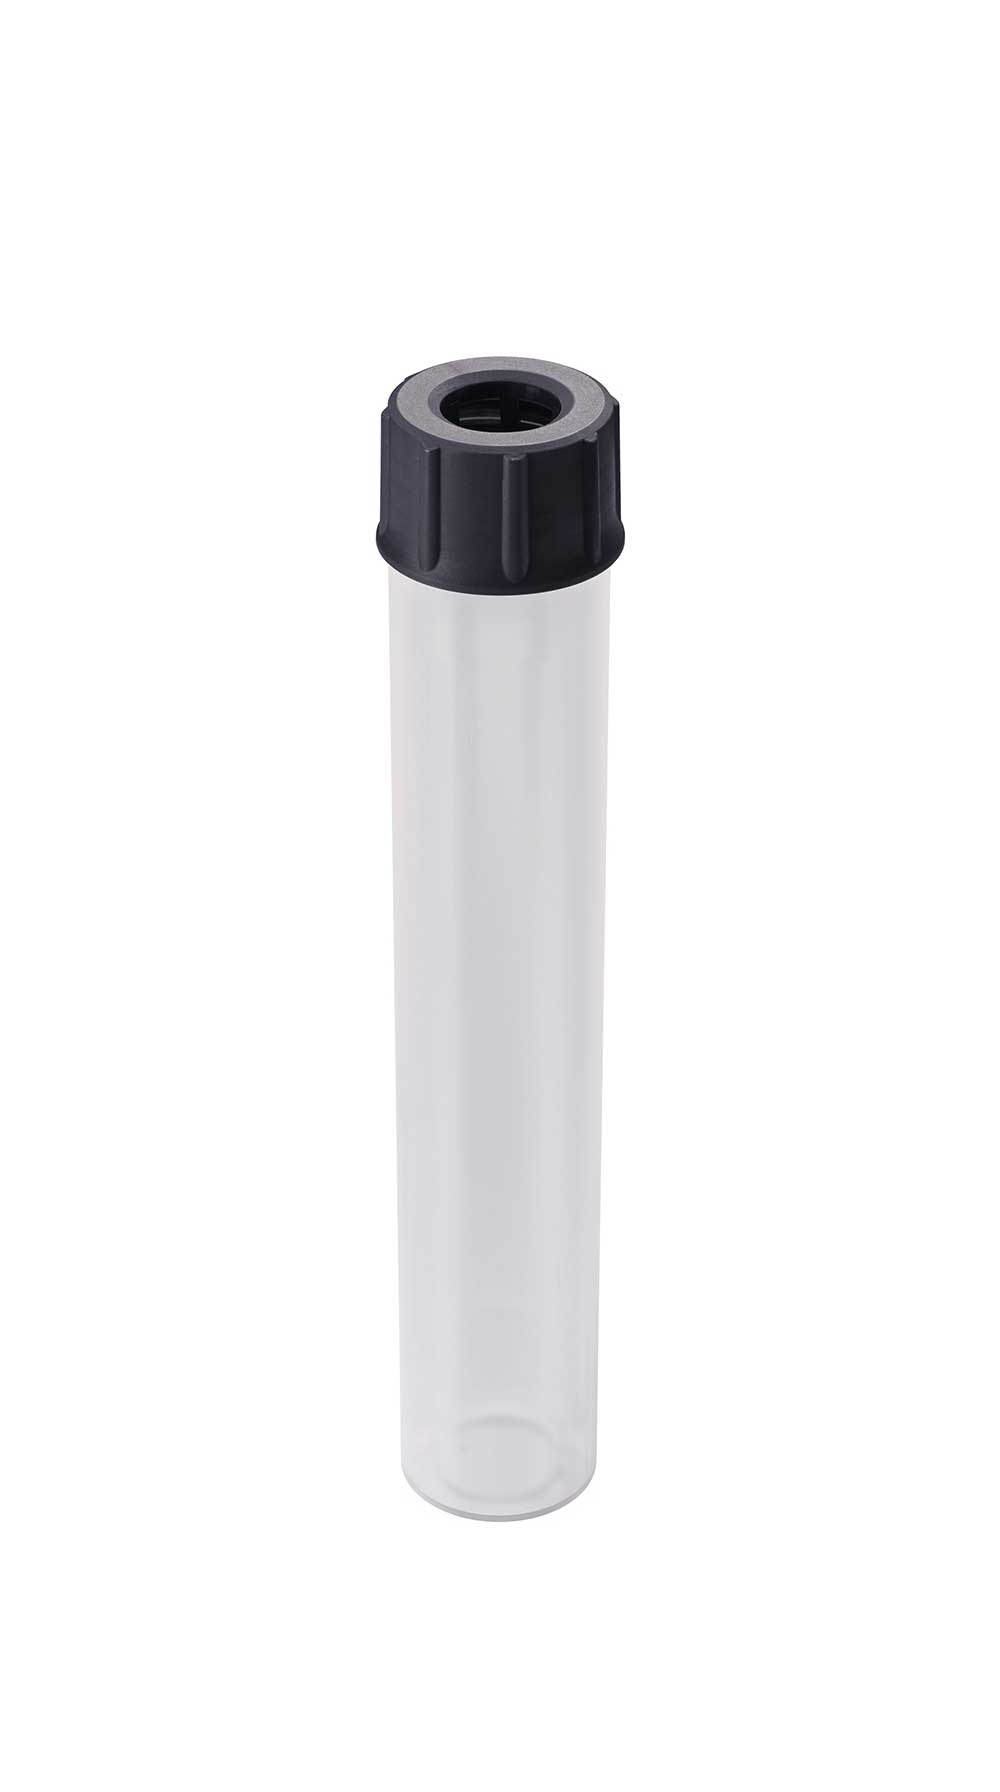 IKA 20006595 Ct.15 Cleaning tube, 0.3772 kg